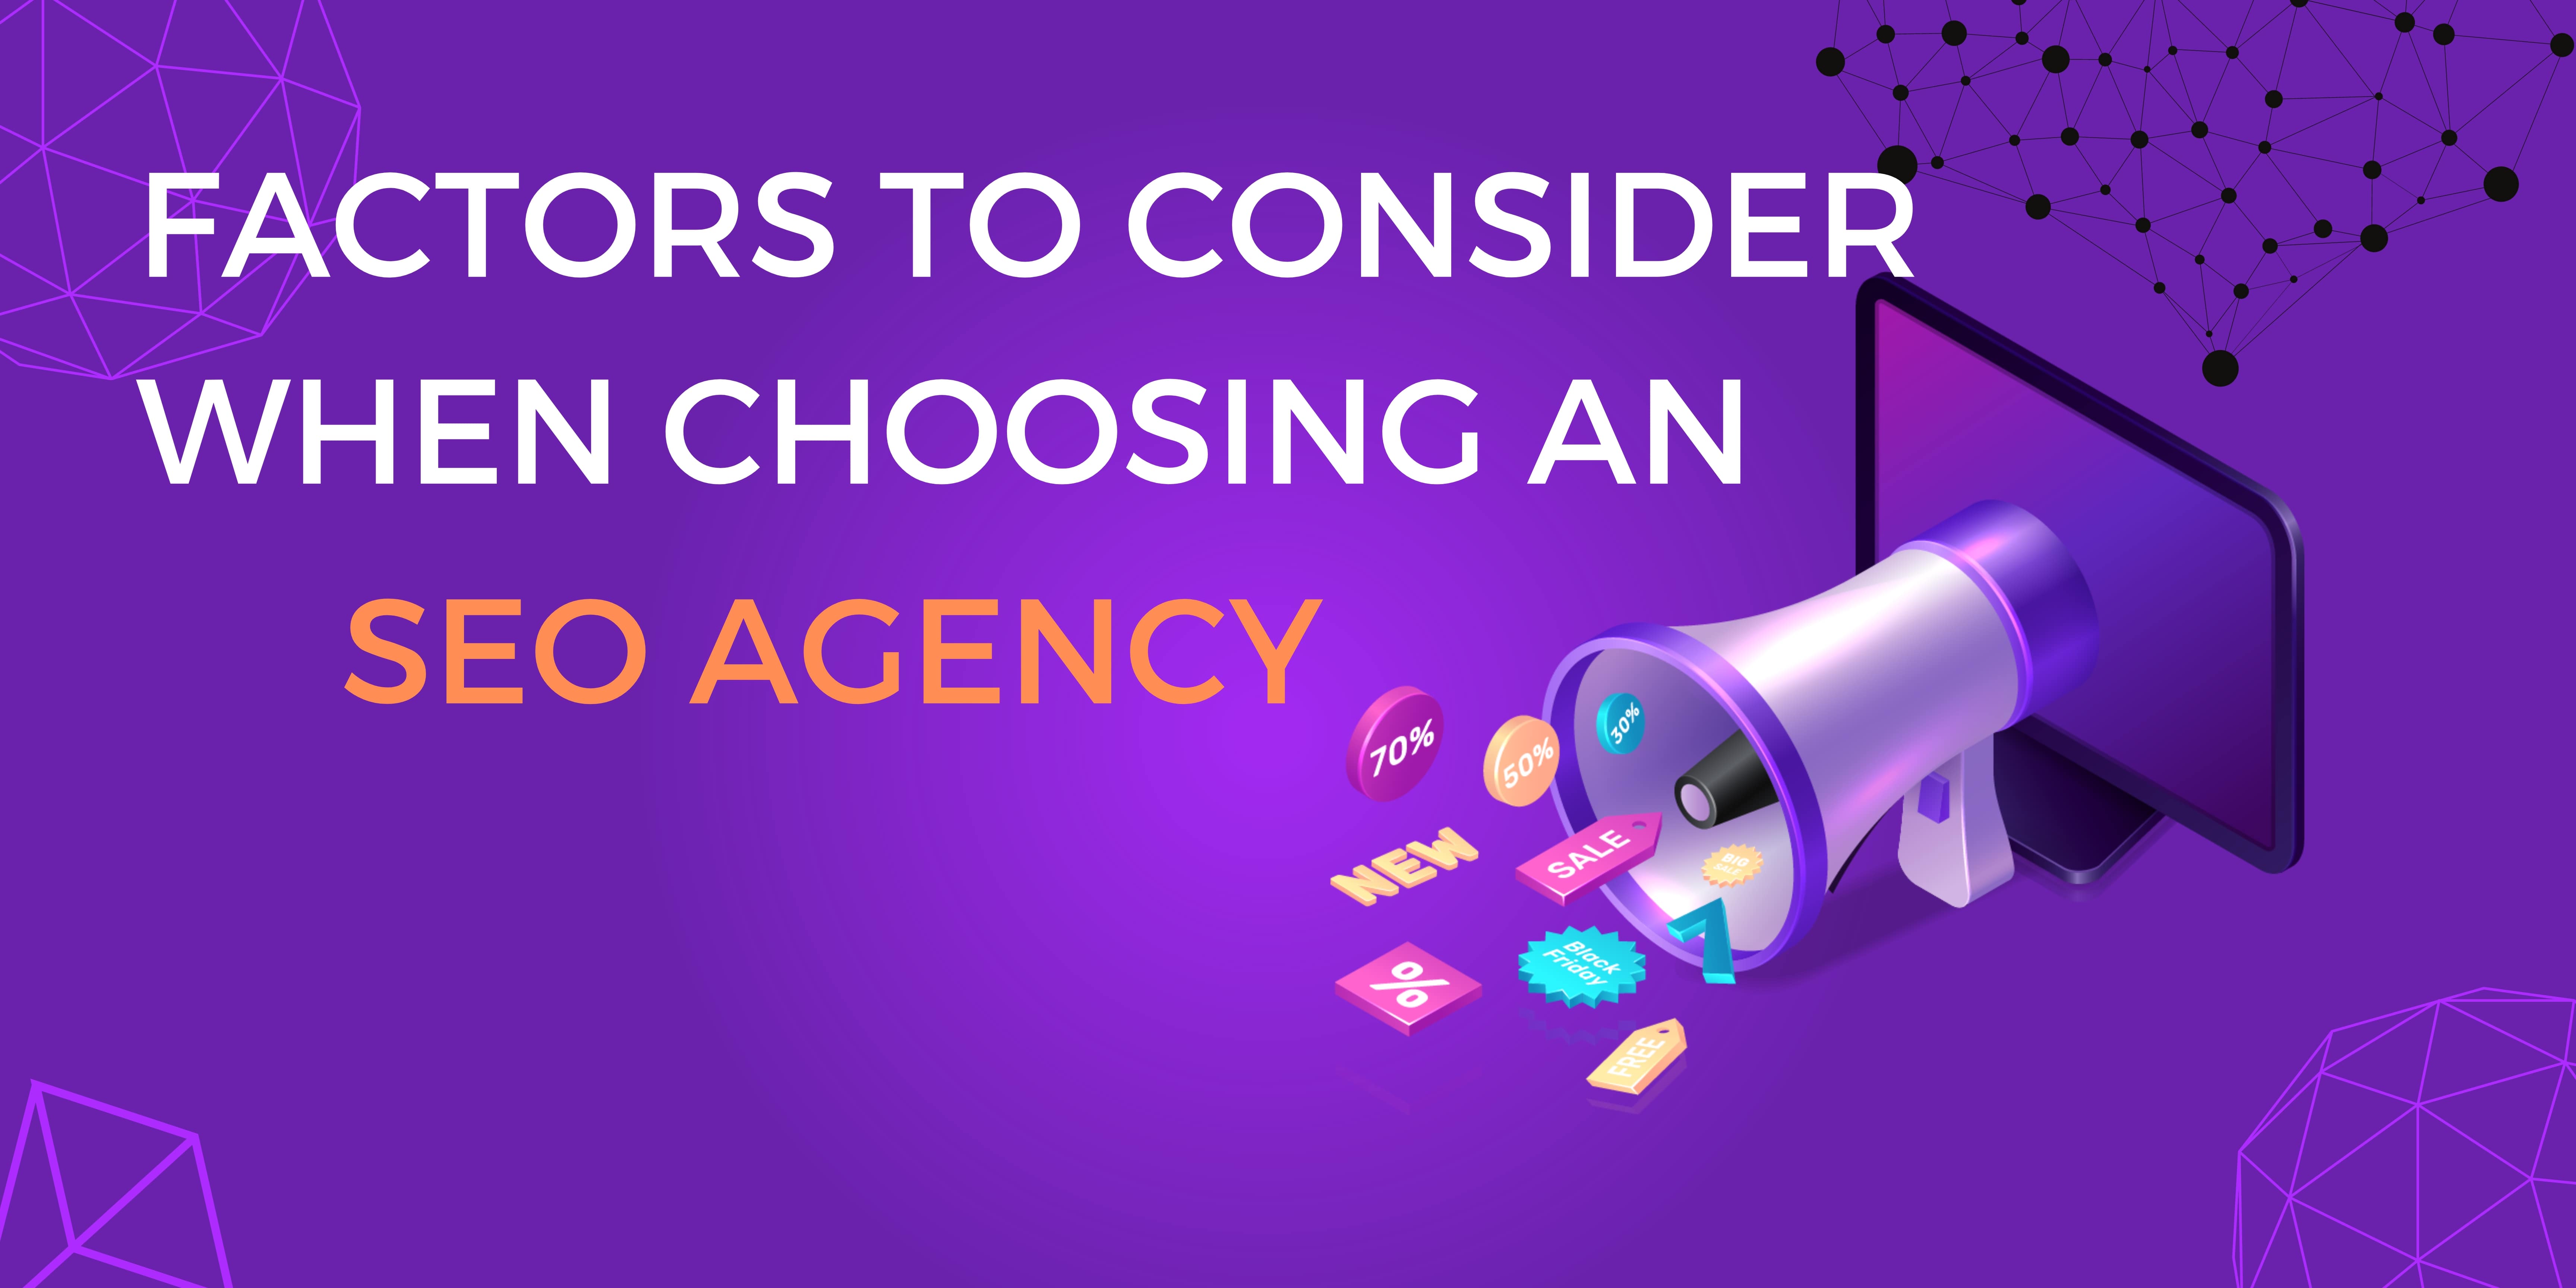 Factors to Consider When Choosing an SEO Agency